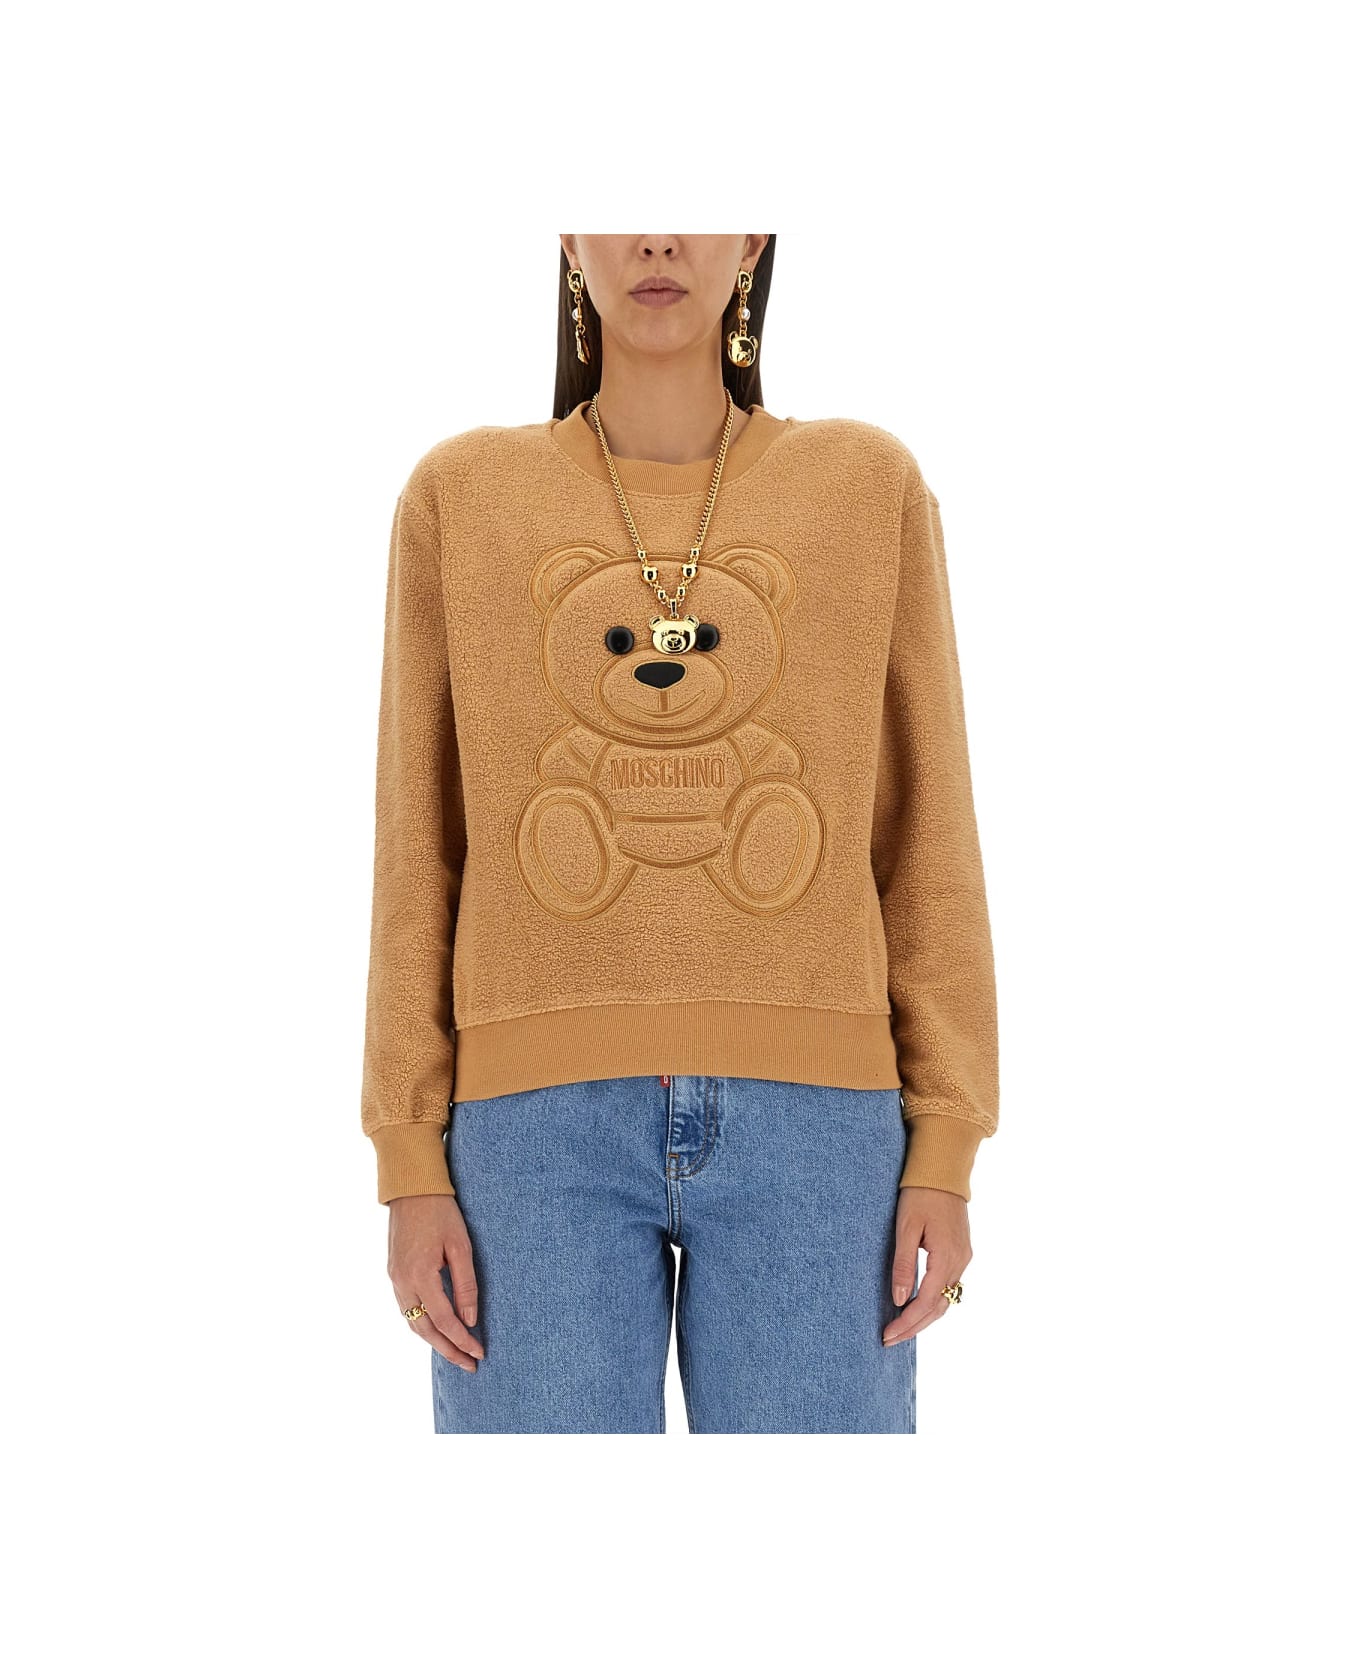 Moschino Teddy Bear Sweatshirt - BEIGE